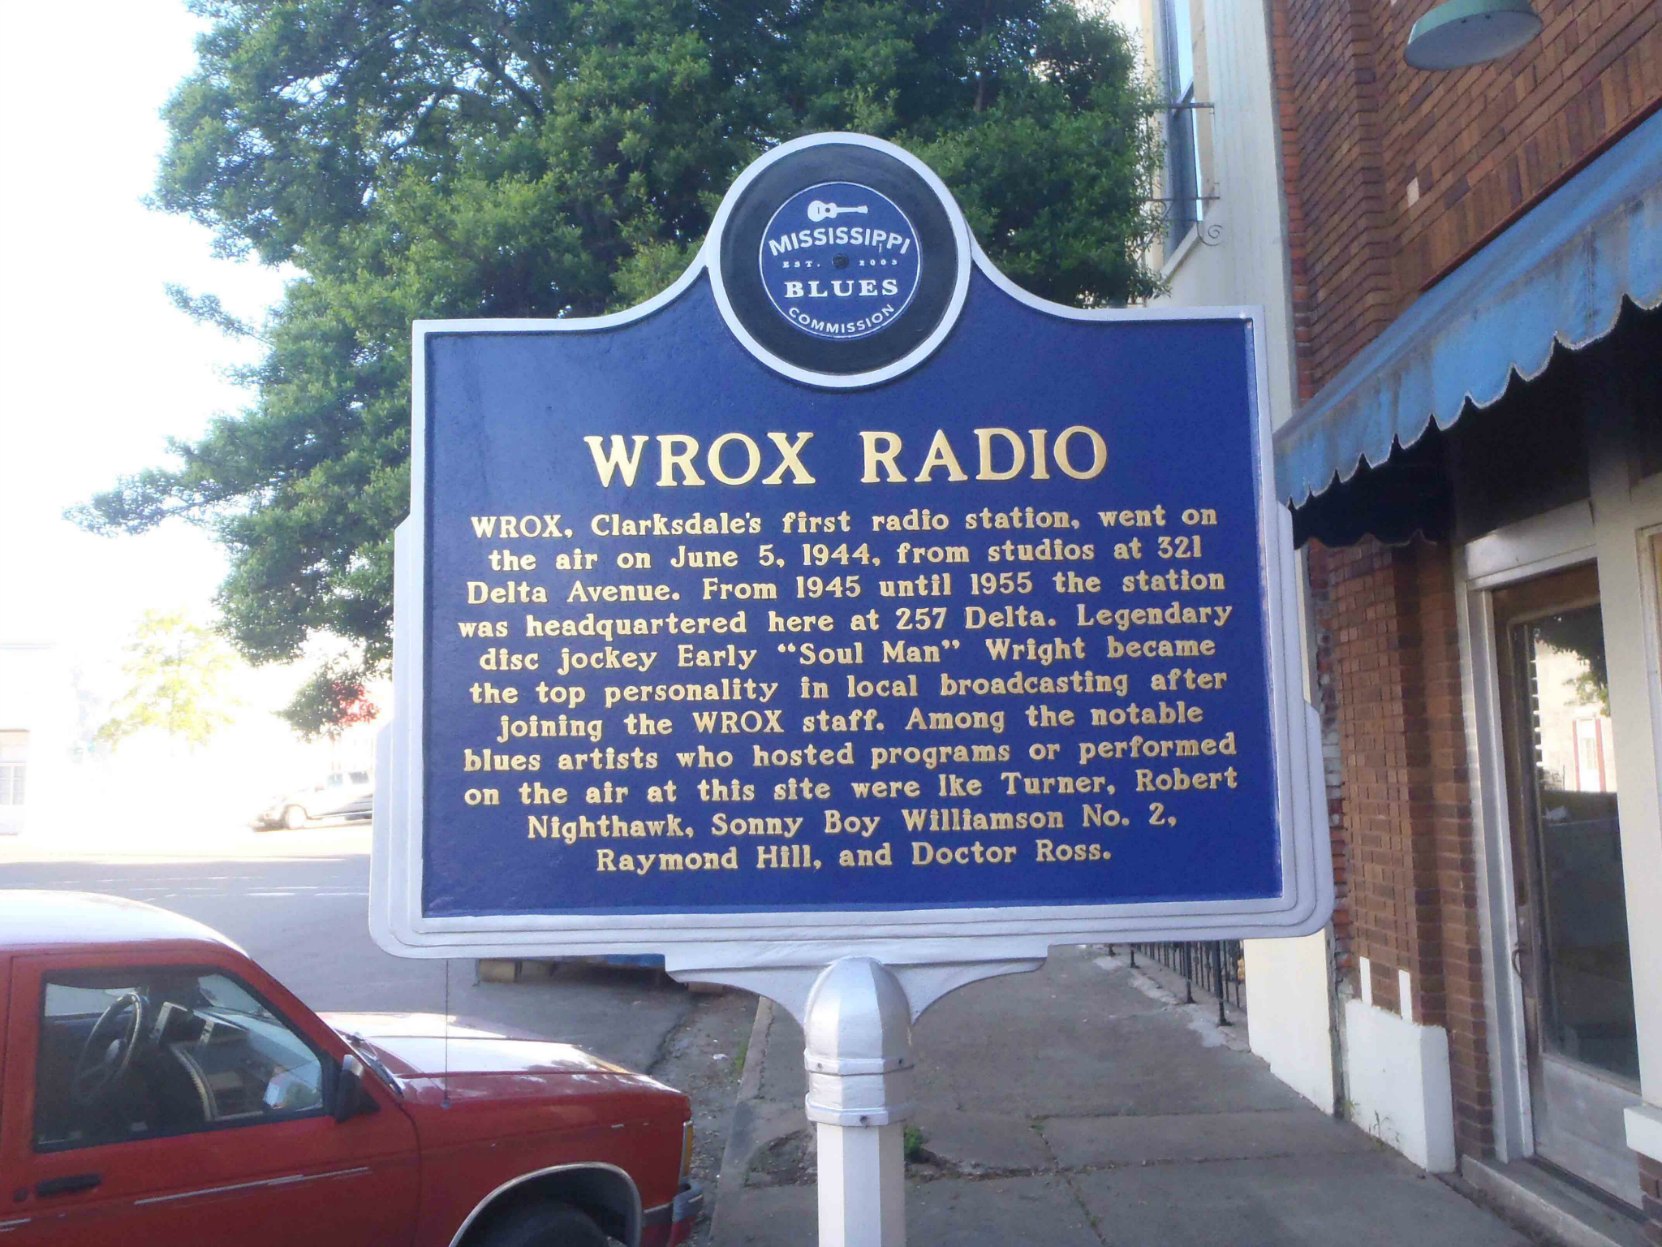 Mississippi Blues Trail marker for WROX, outside 257 Delta, Clarksdale, Mississippi.